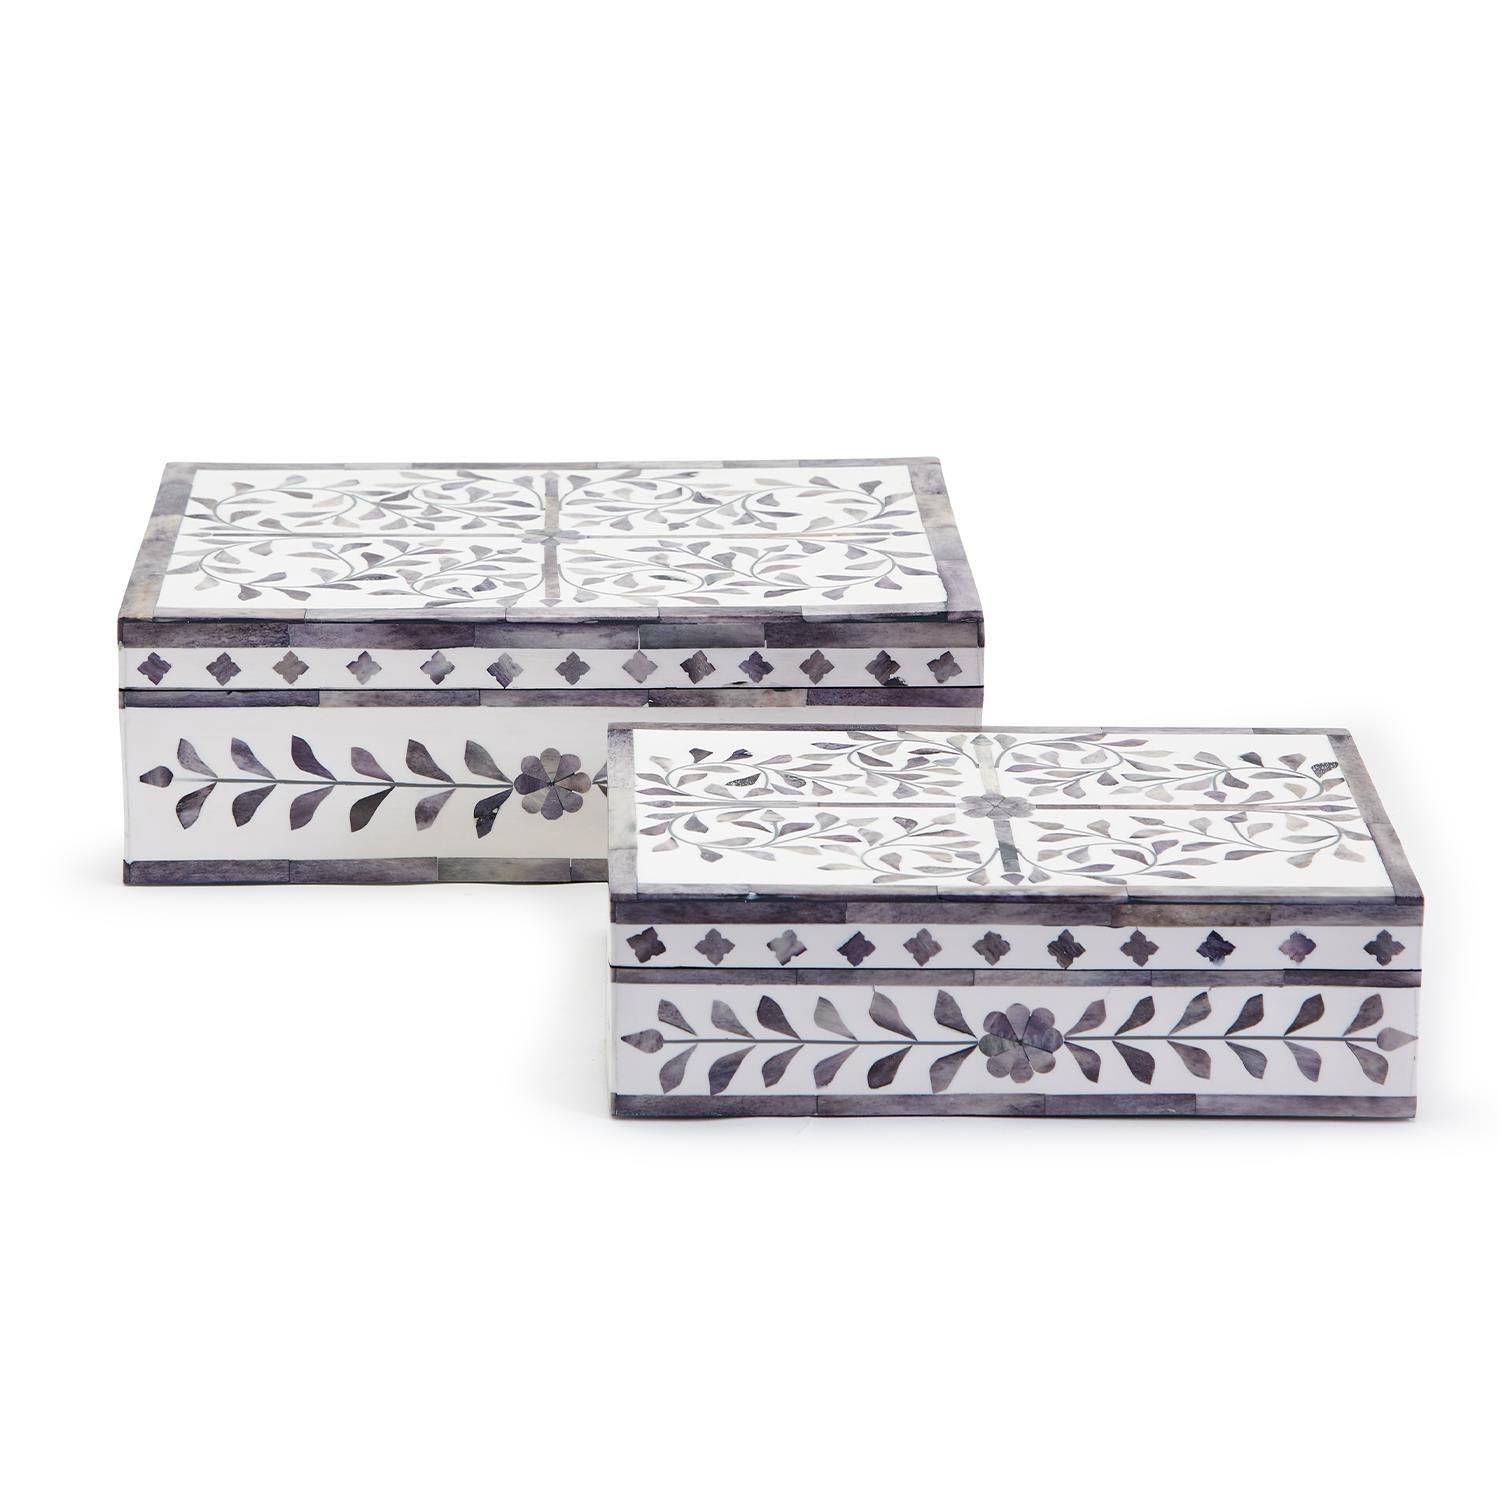 Two's Company Jaipur Palace S/2 Gray/Wht Cover Box